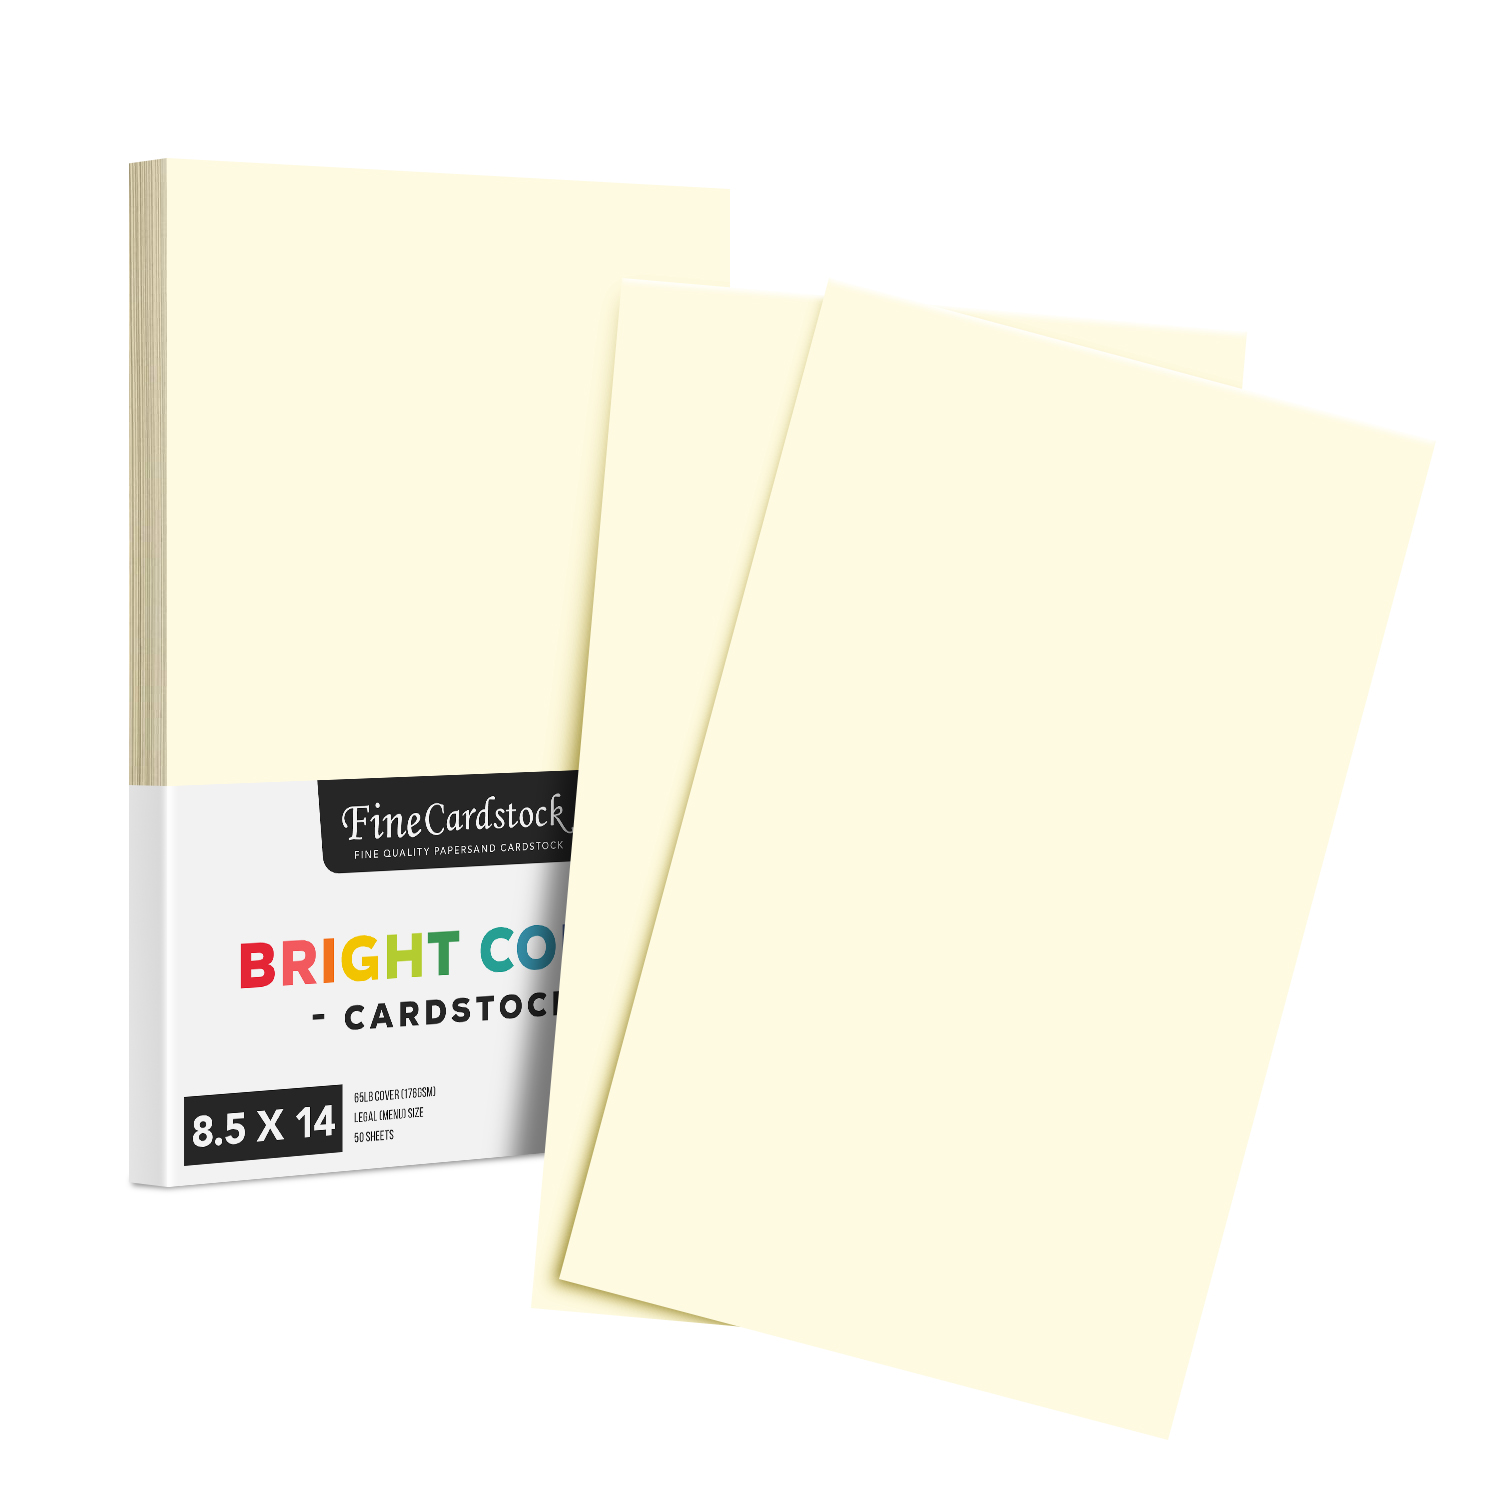 8.5 x 14 Color Cardstock Plasma Pink - Bulk and Wholesale - Fine